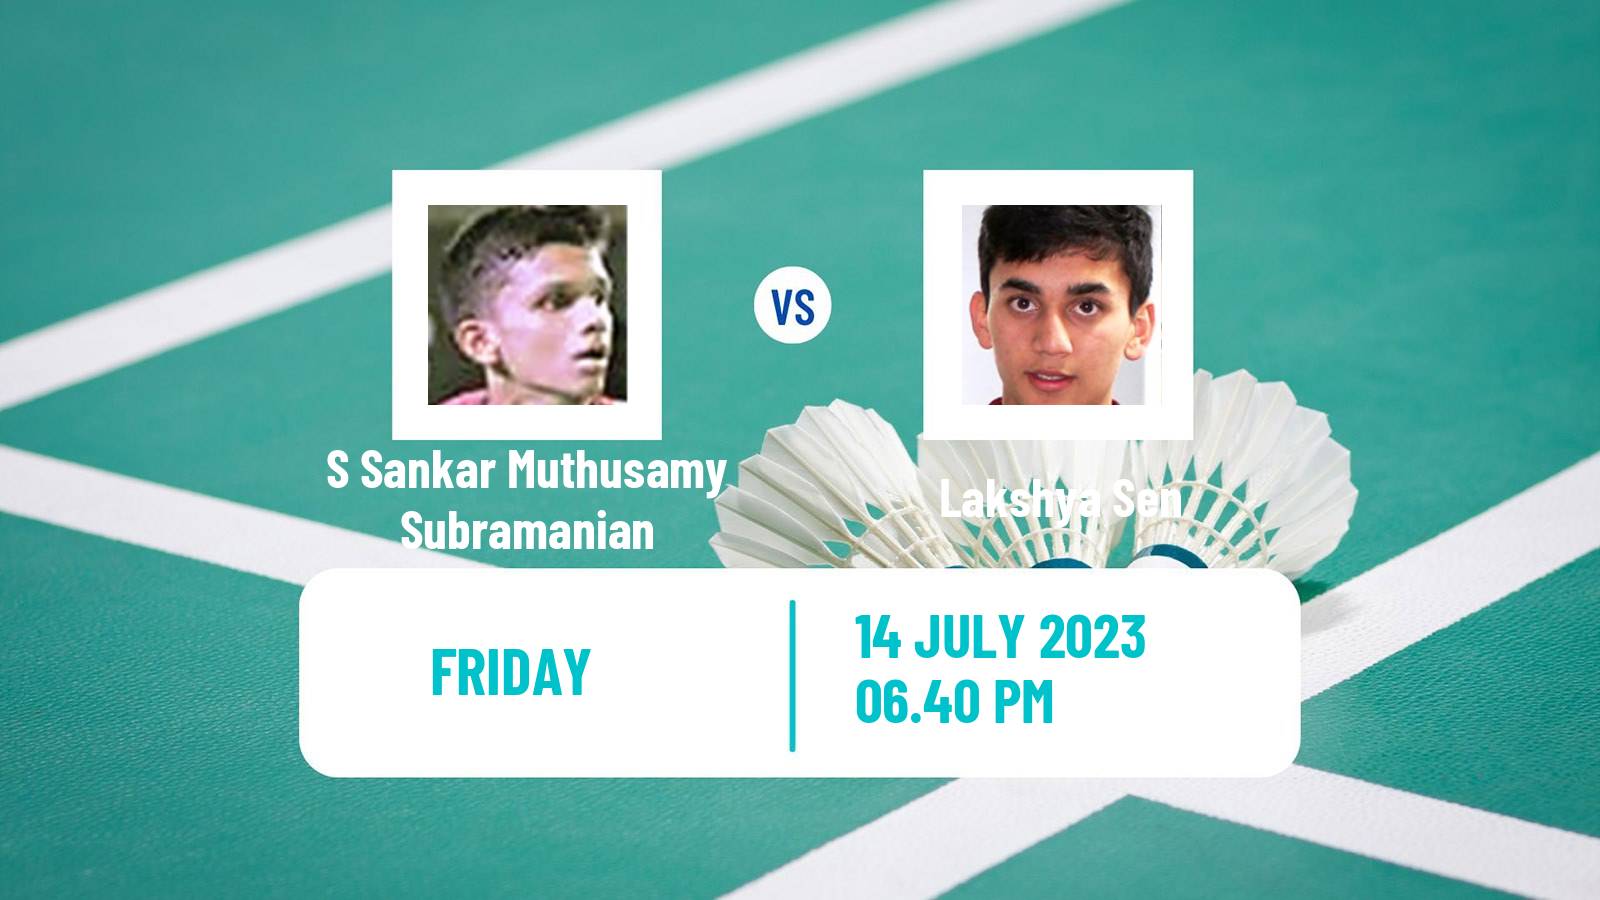 Badminton BWF World Tour Us Open Men S Sankar Muthusamy Subramanian - Lakshya Sen